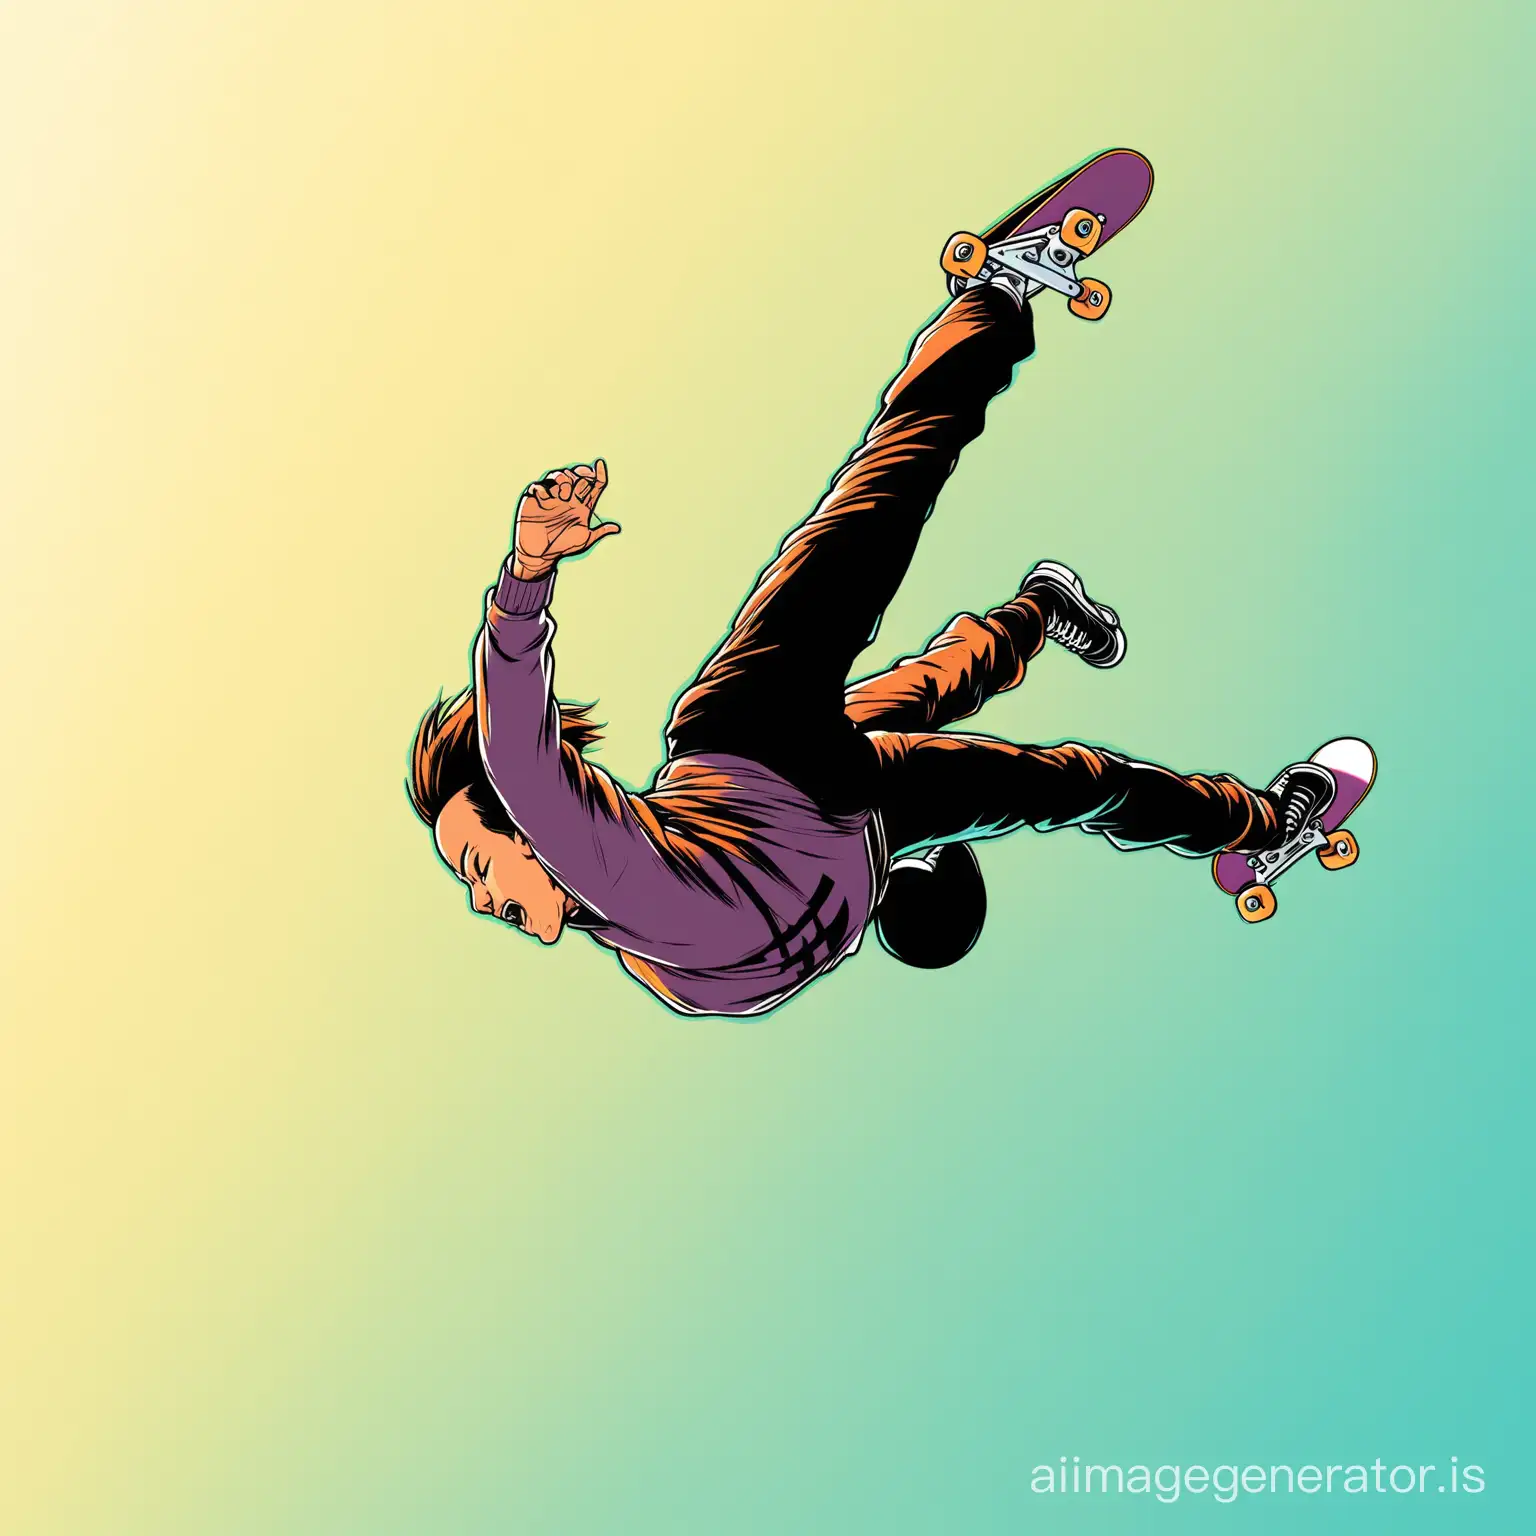 Stylized-Skateboarder-Falling-Over-Dynamic-Illustration-of-Skateboarding-Mishap